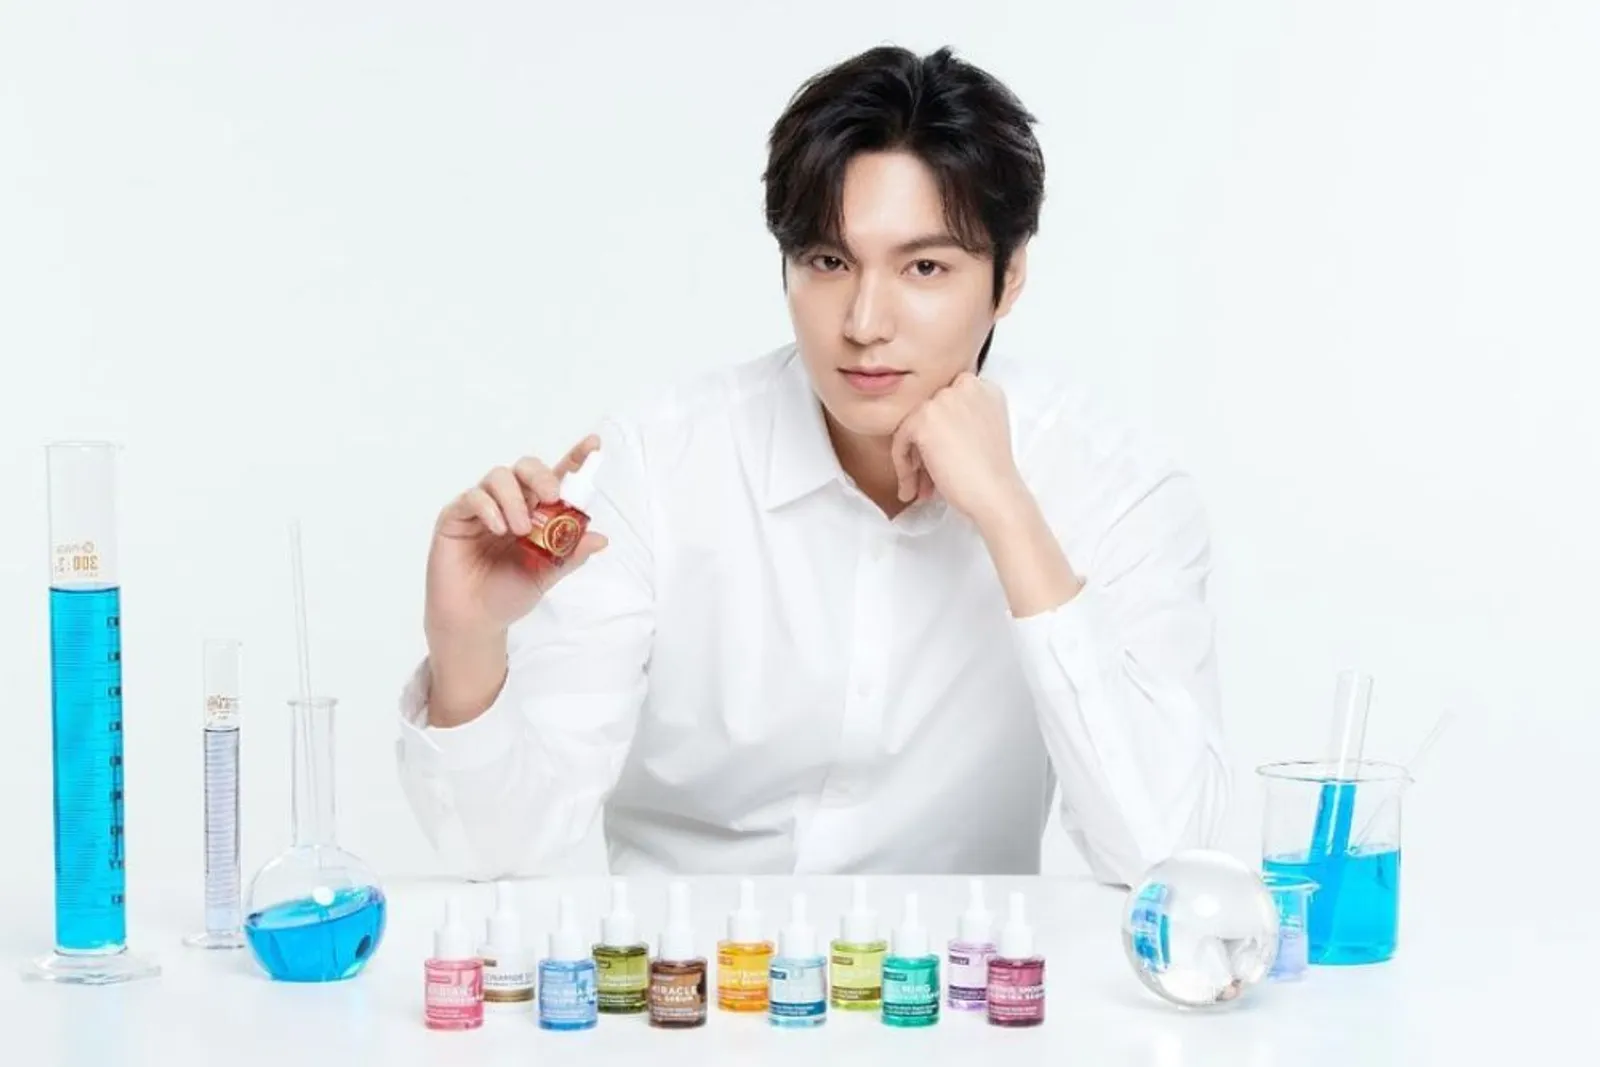 Heboh, Lee Min Ho Unggah Brand Kecantikan Lokal Favoritnya